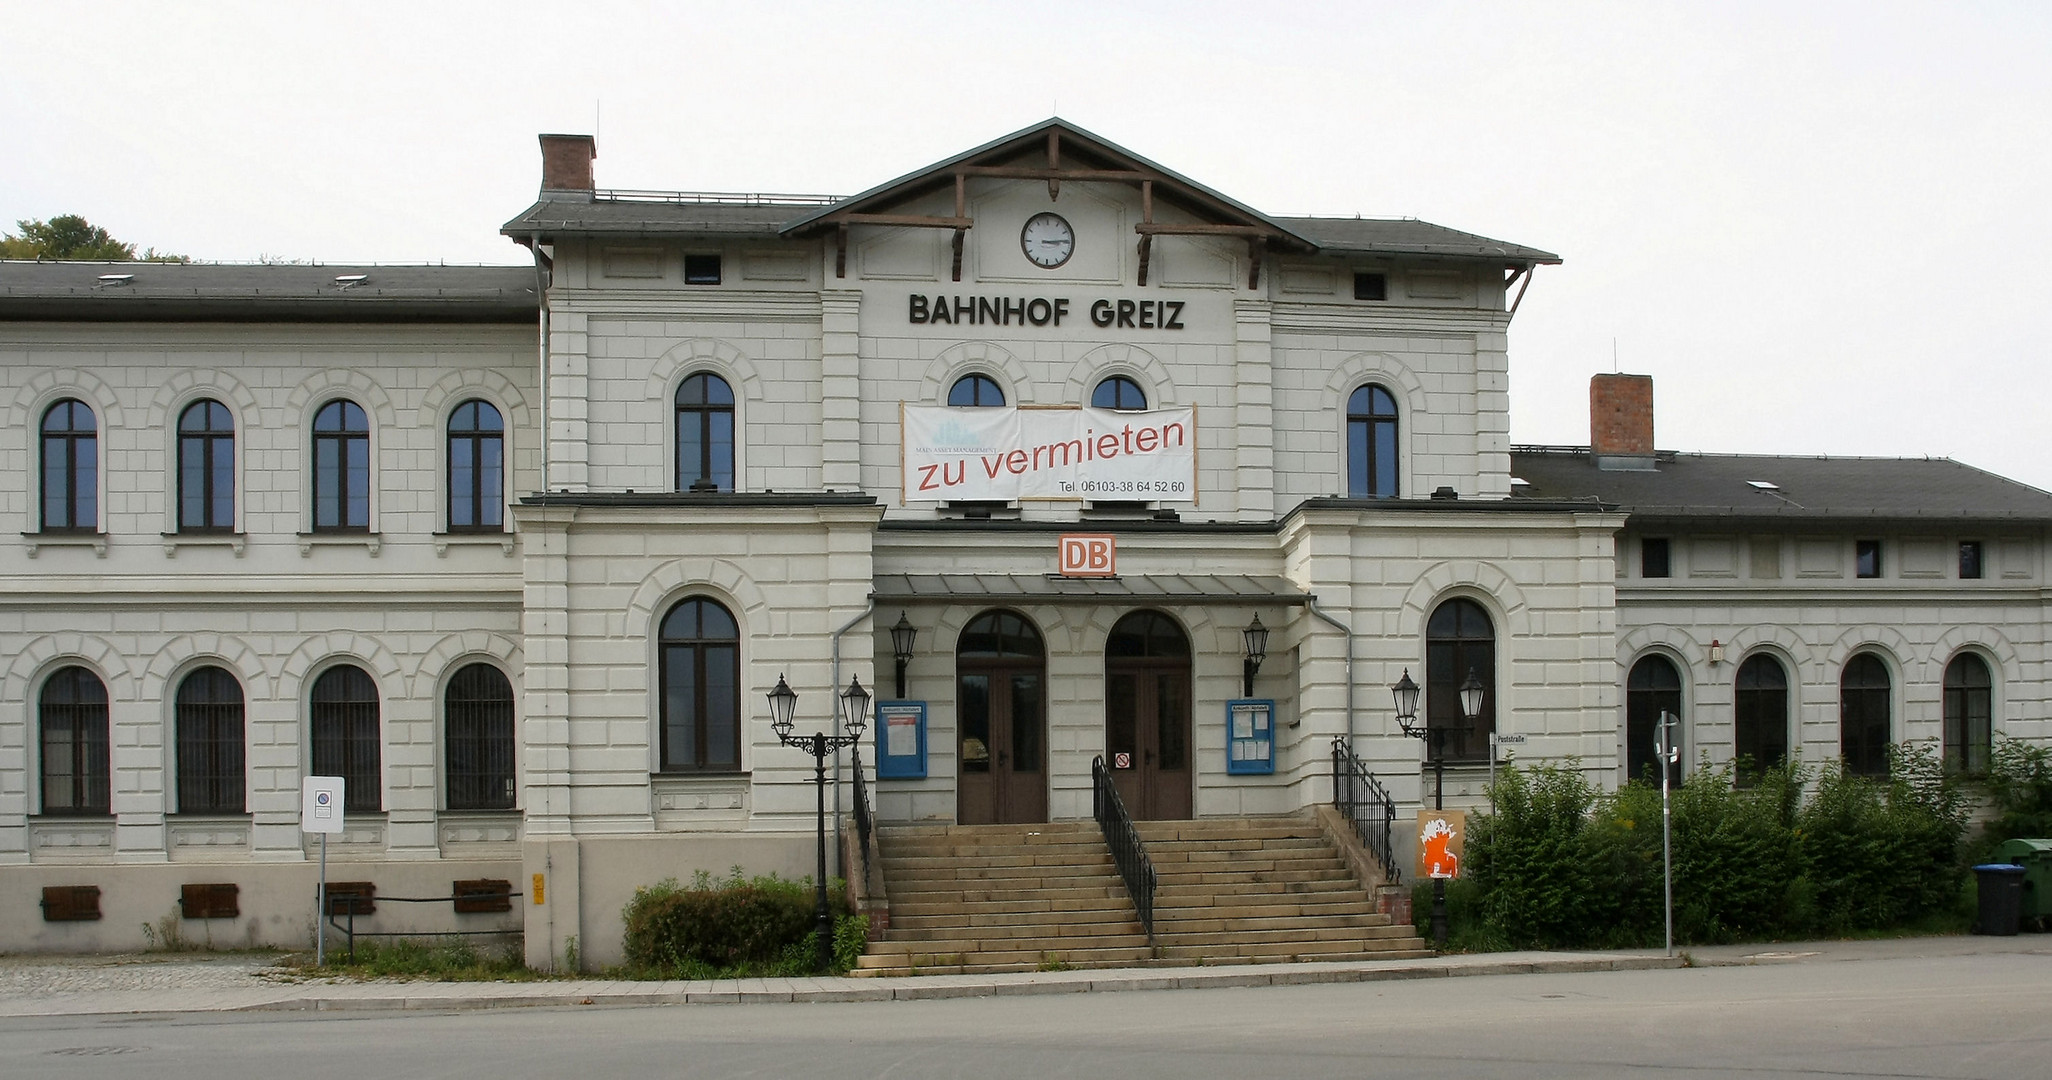 Bahnhof Greiz